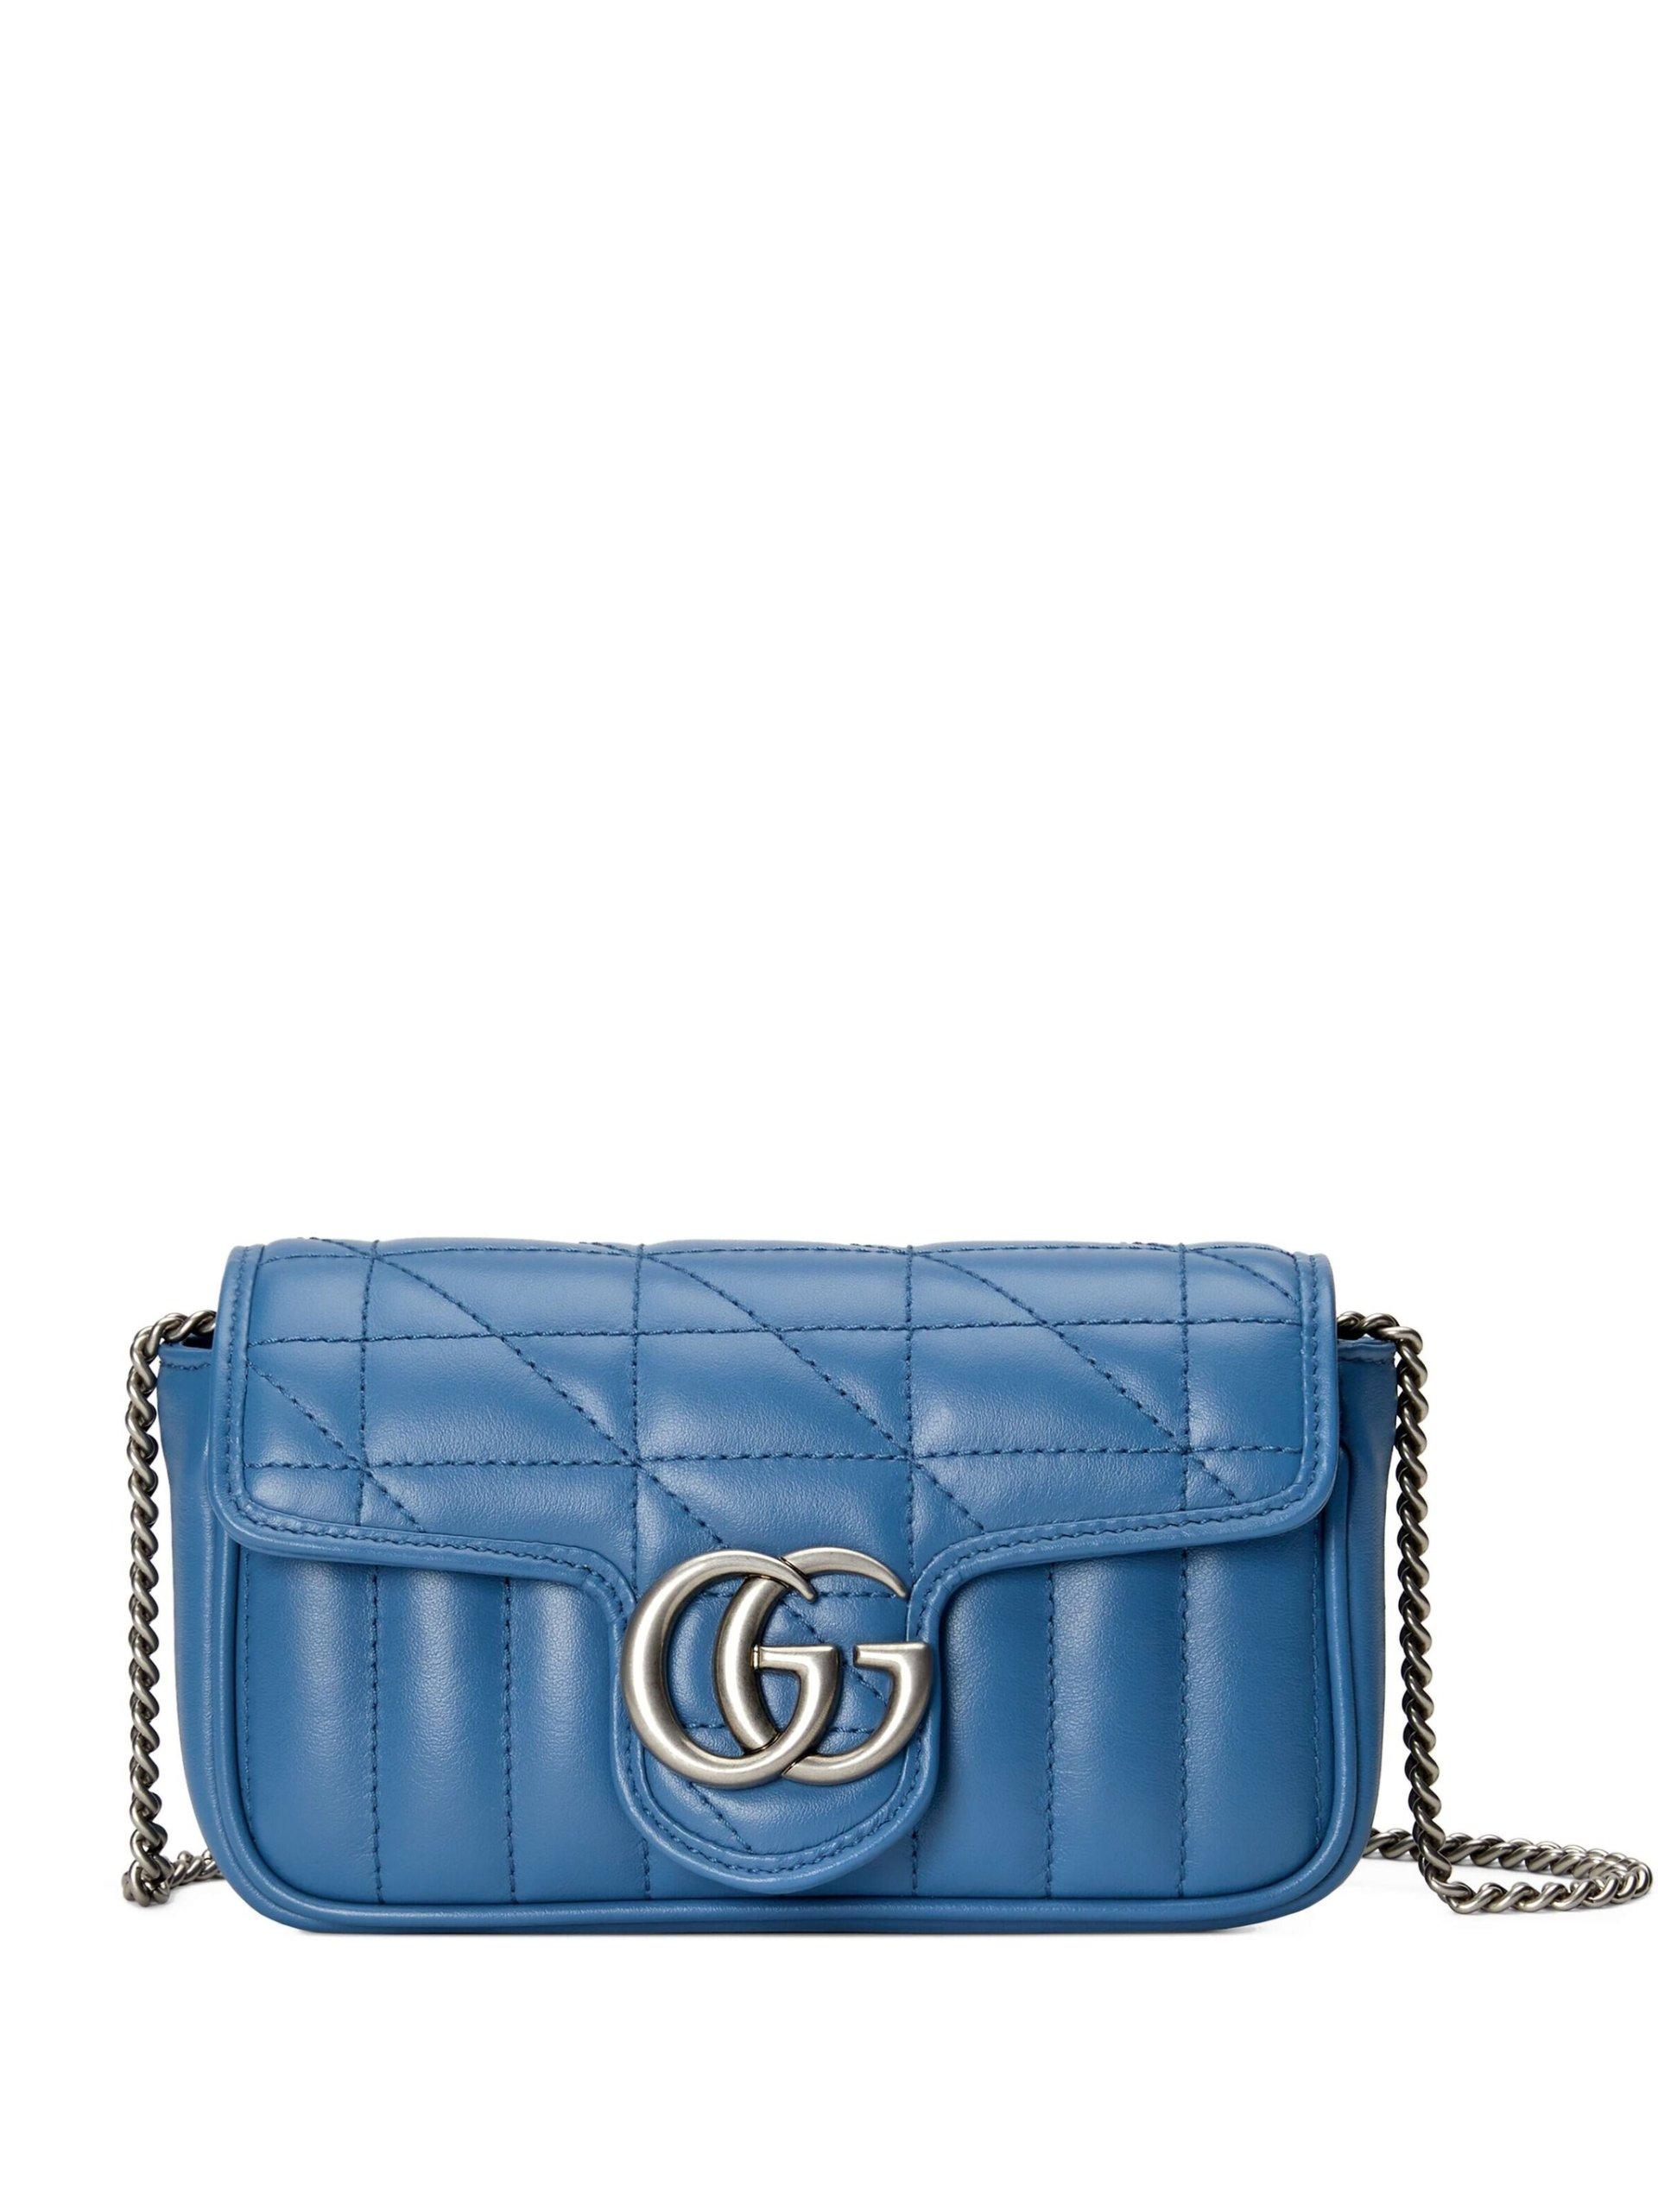 Gucci gg Marmont Super Mini Leather Shoulder Bag in Blue | Lyst